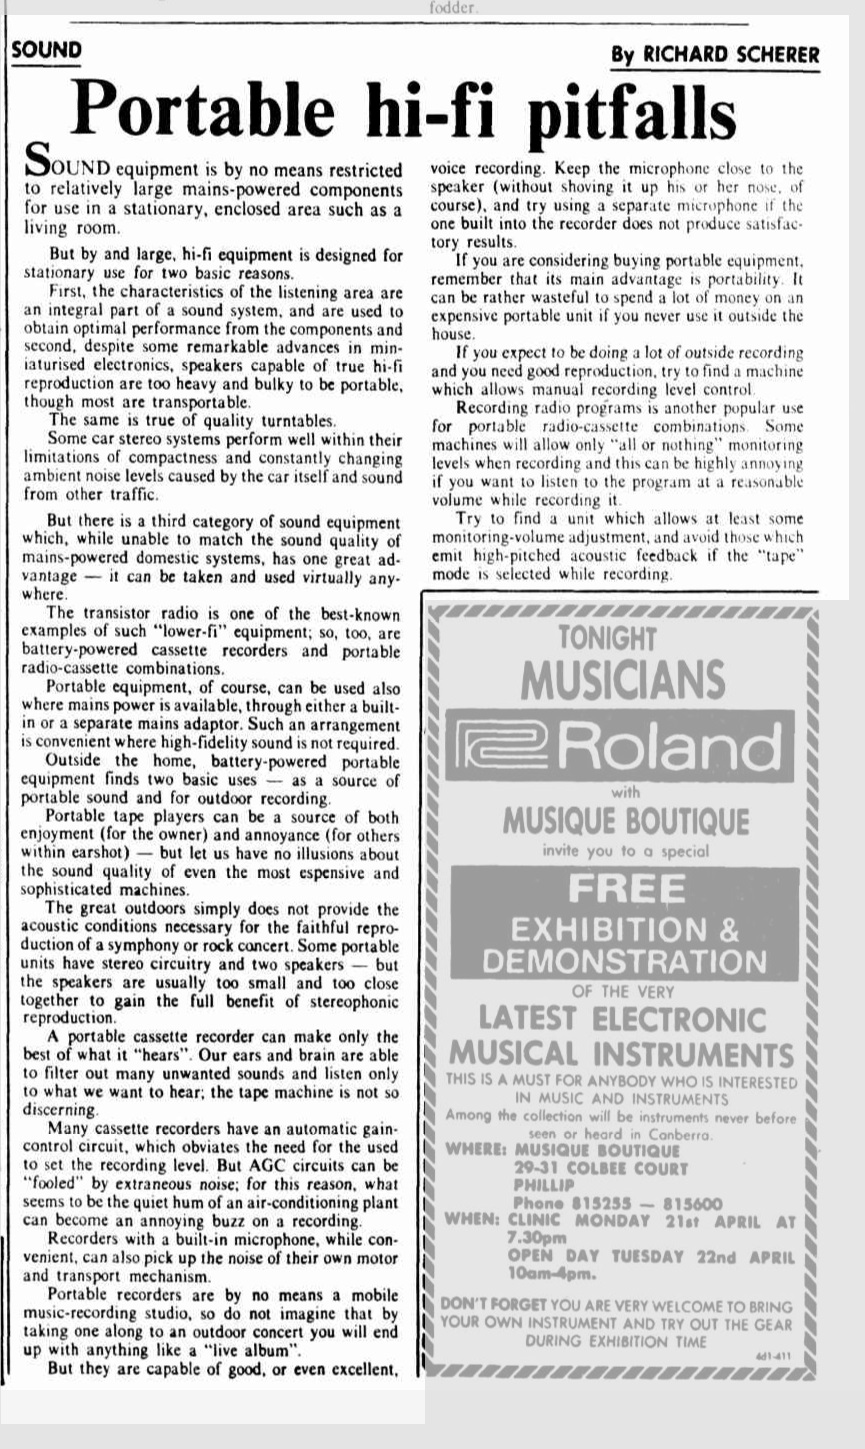 Portable hi-fi pitfalls 1980 The Canberra Times.jpg